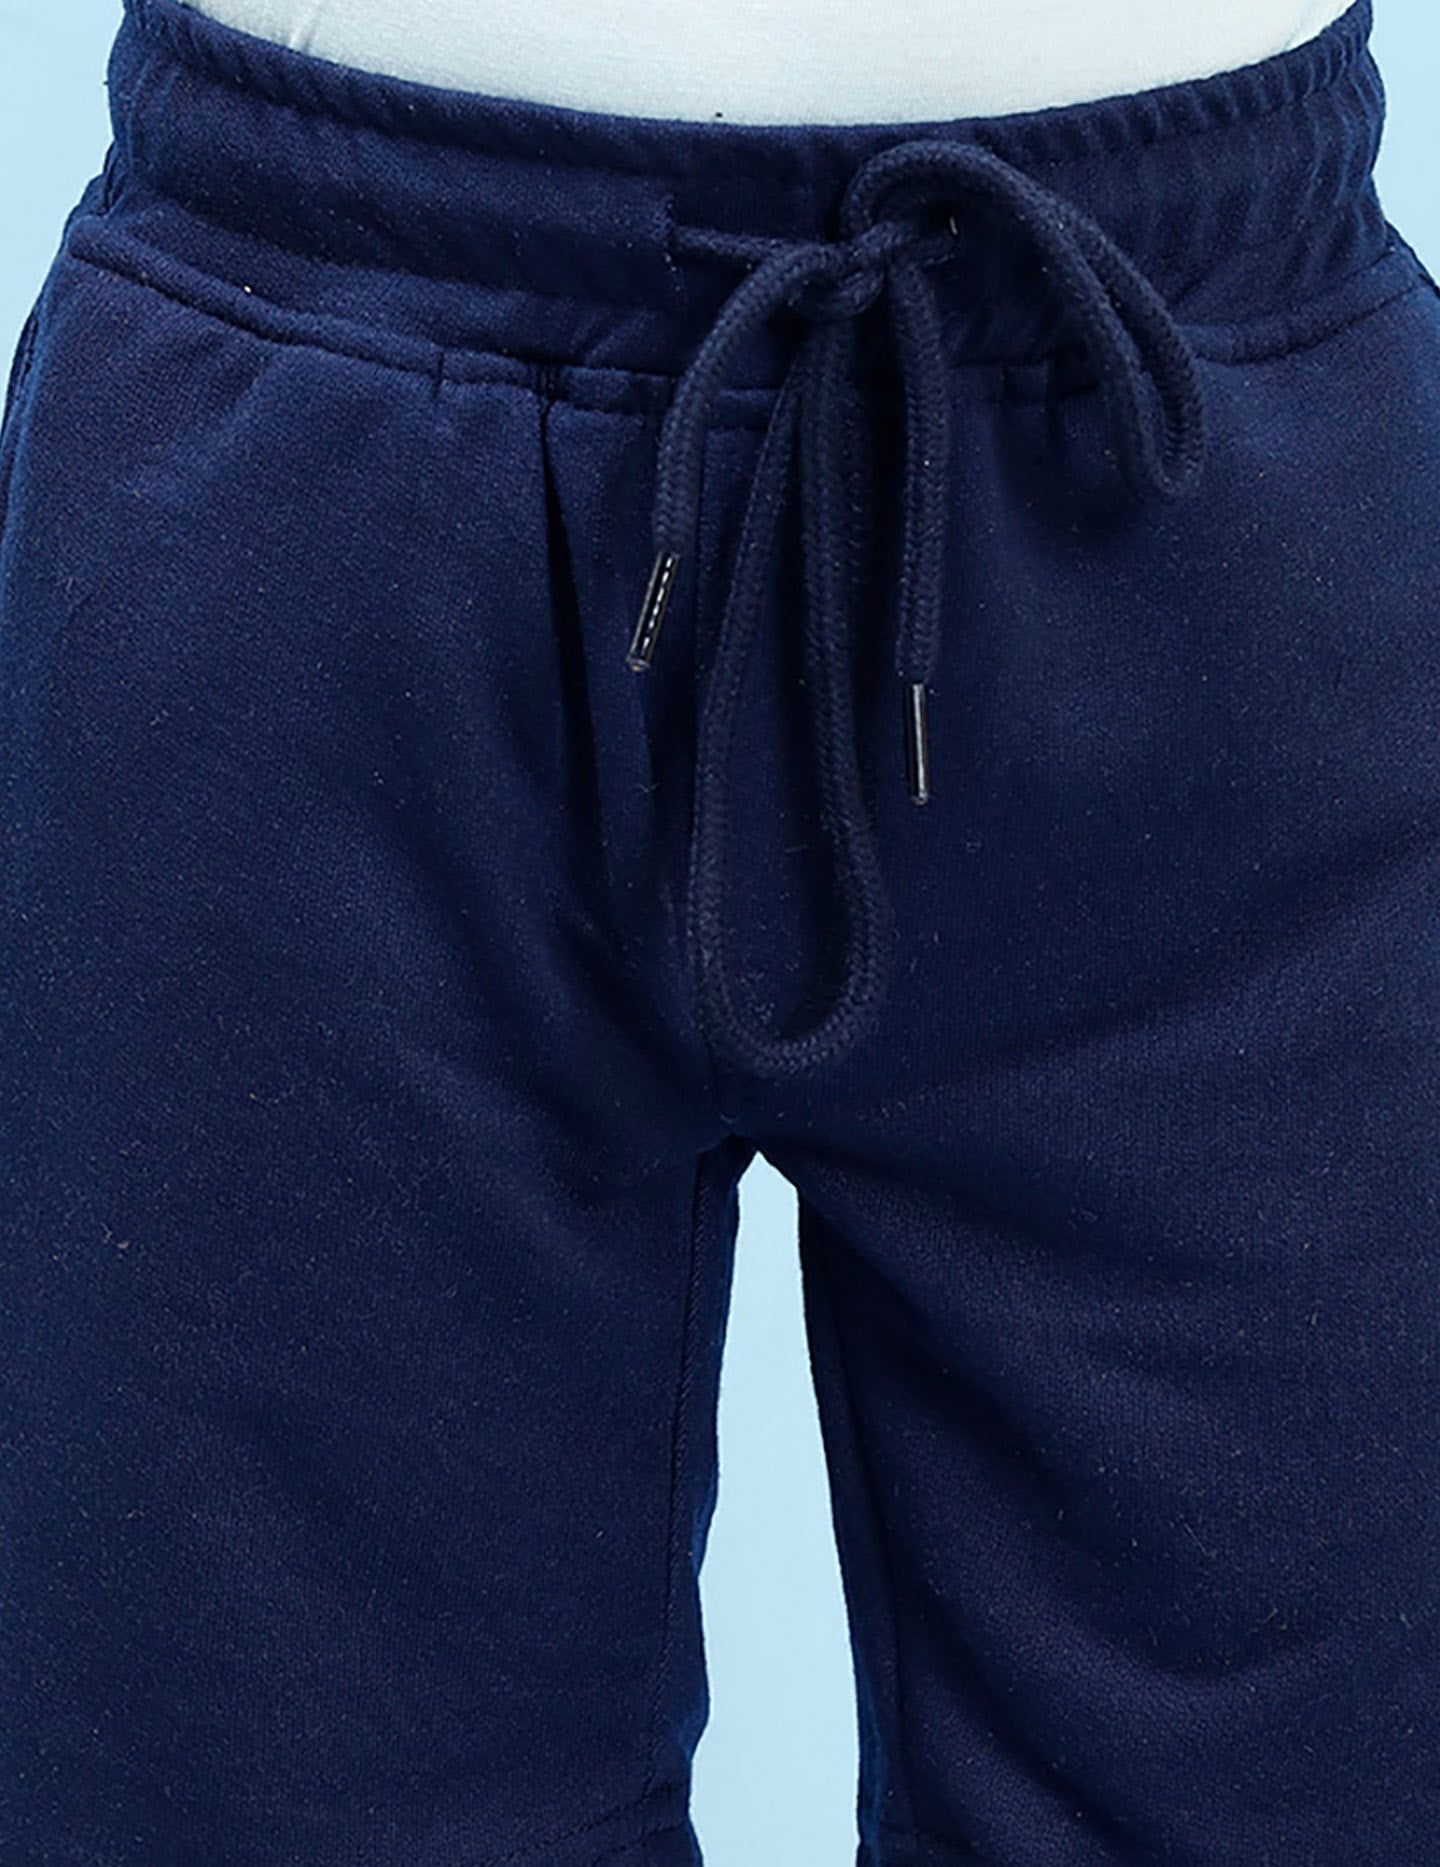 Nusyl 1994 Printed Navy Blue Boys Shorts